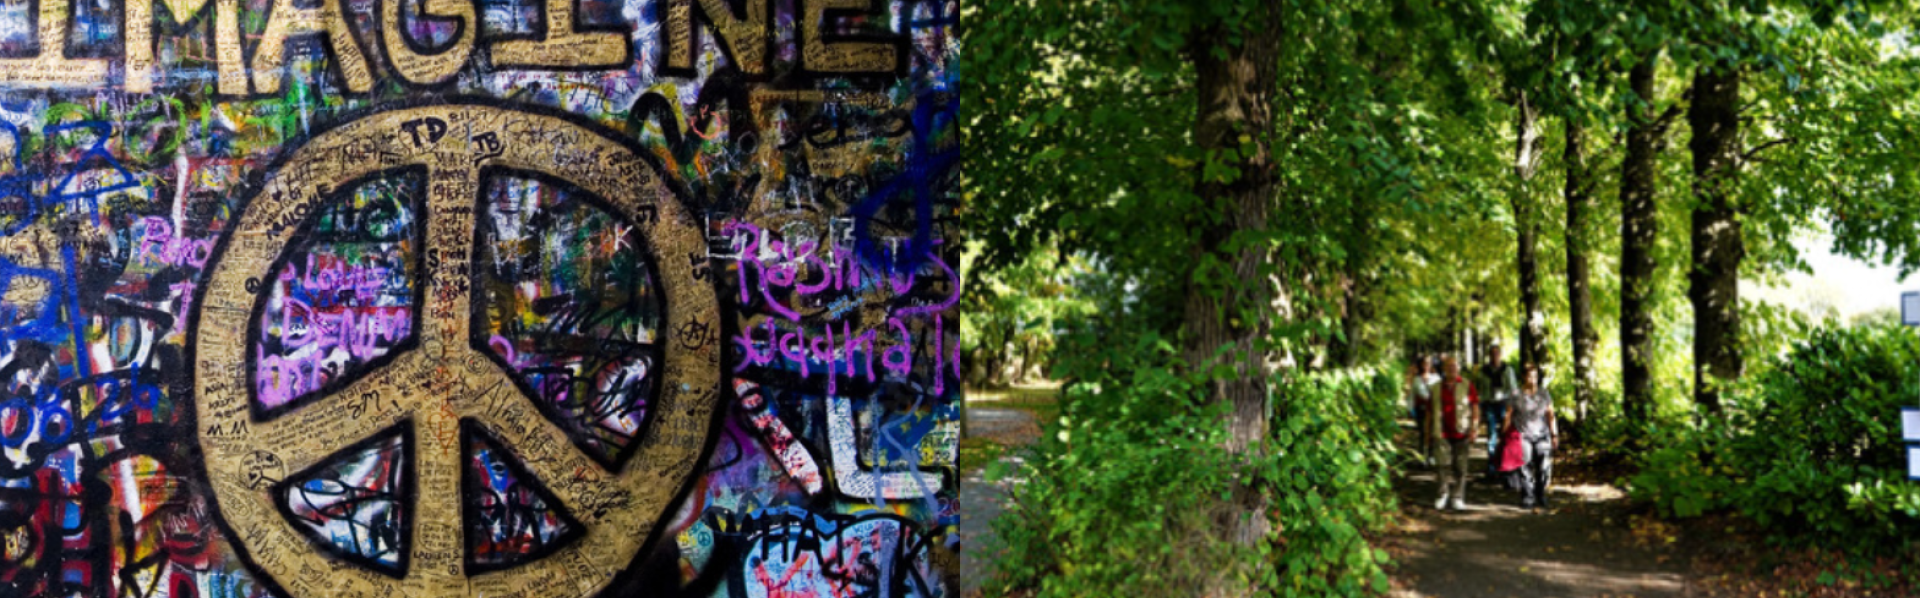 Bomen en een pad in de Kloostertuin in Haacht-Tildonk met daarnaast graffiti: IMAGINE peace op de Lennon Wall